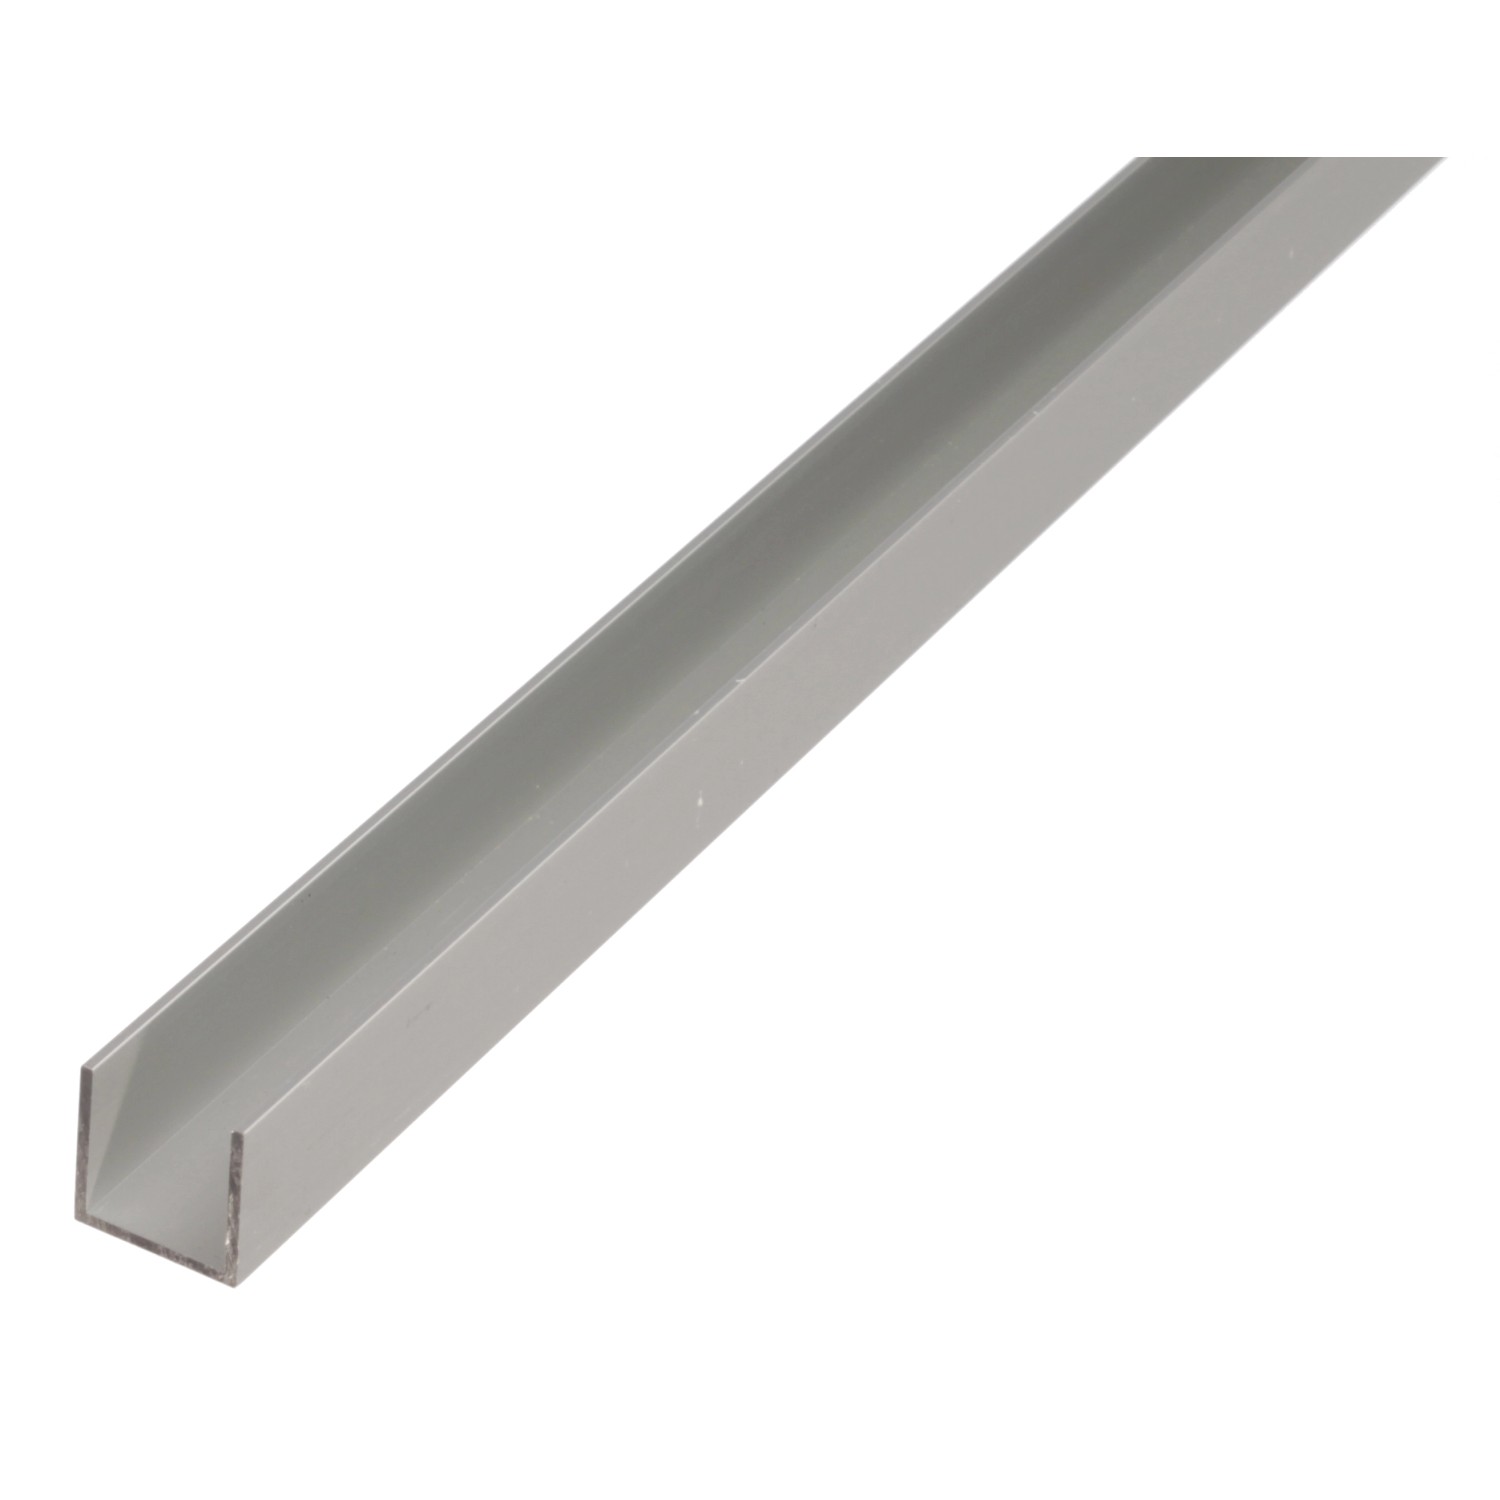 Rohr Profil aus Aluminium 35 x 2 mm online kaufen